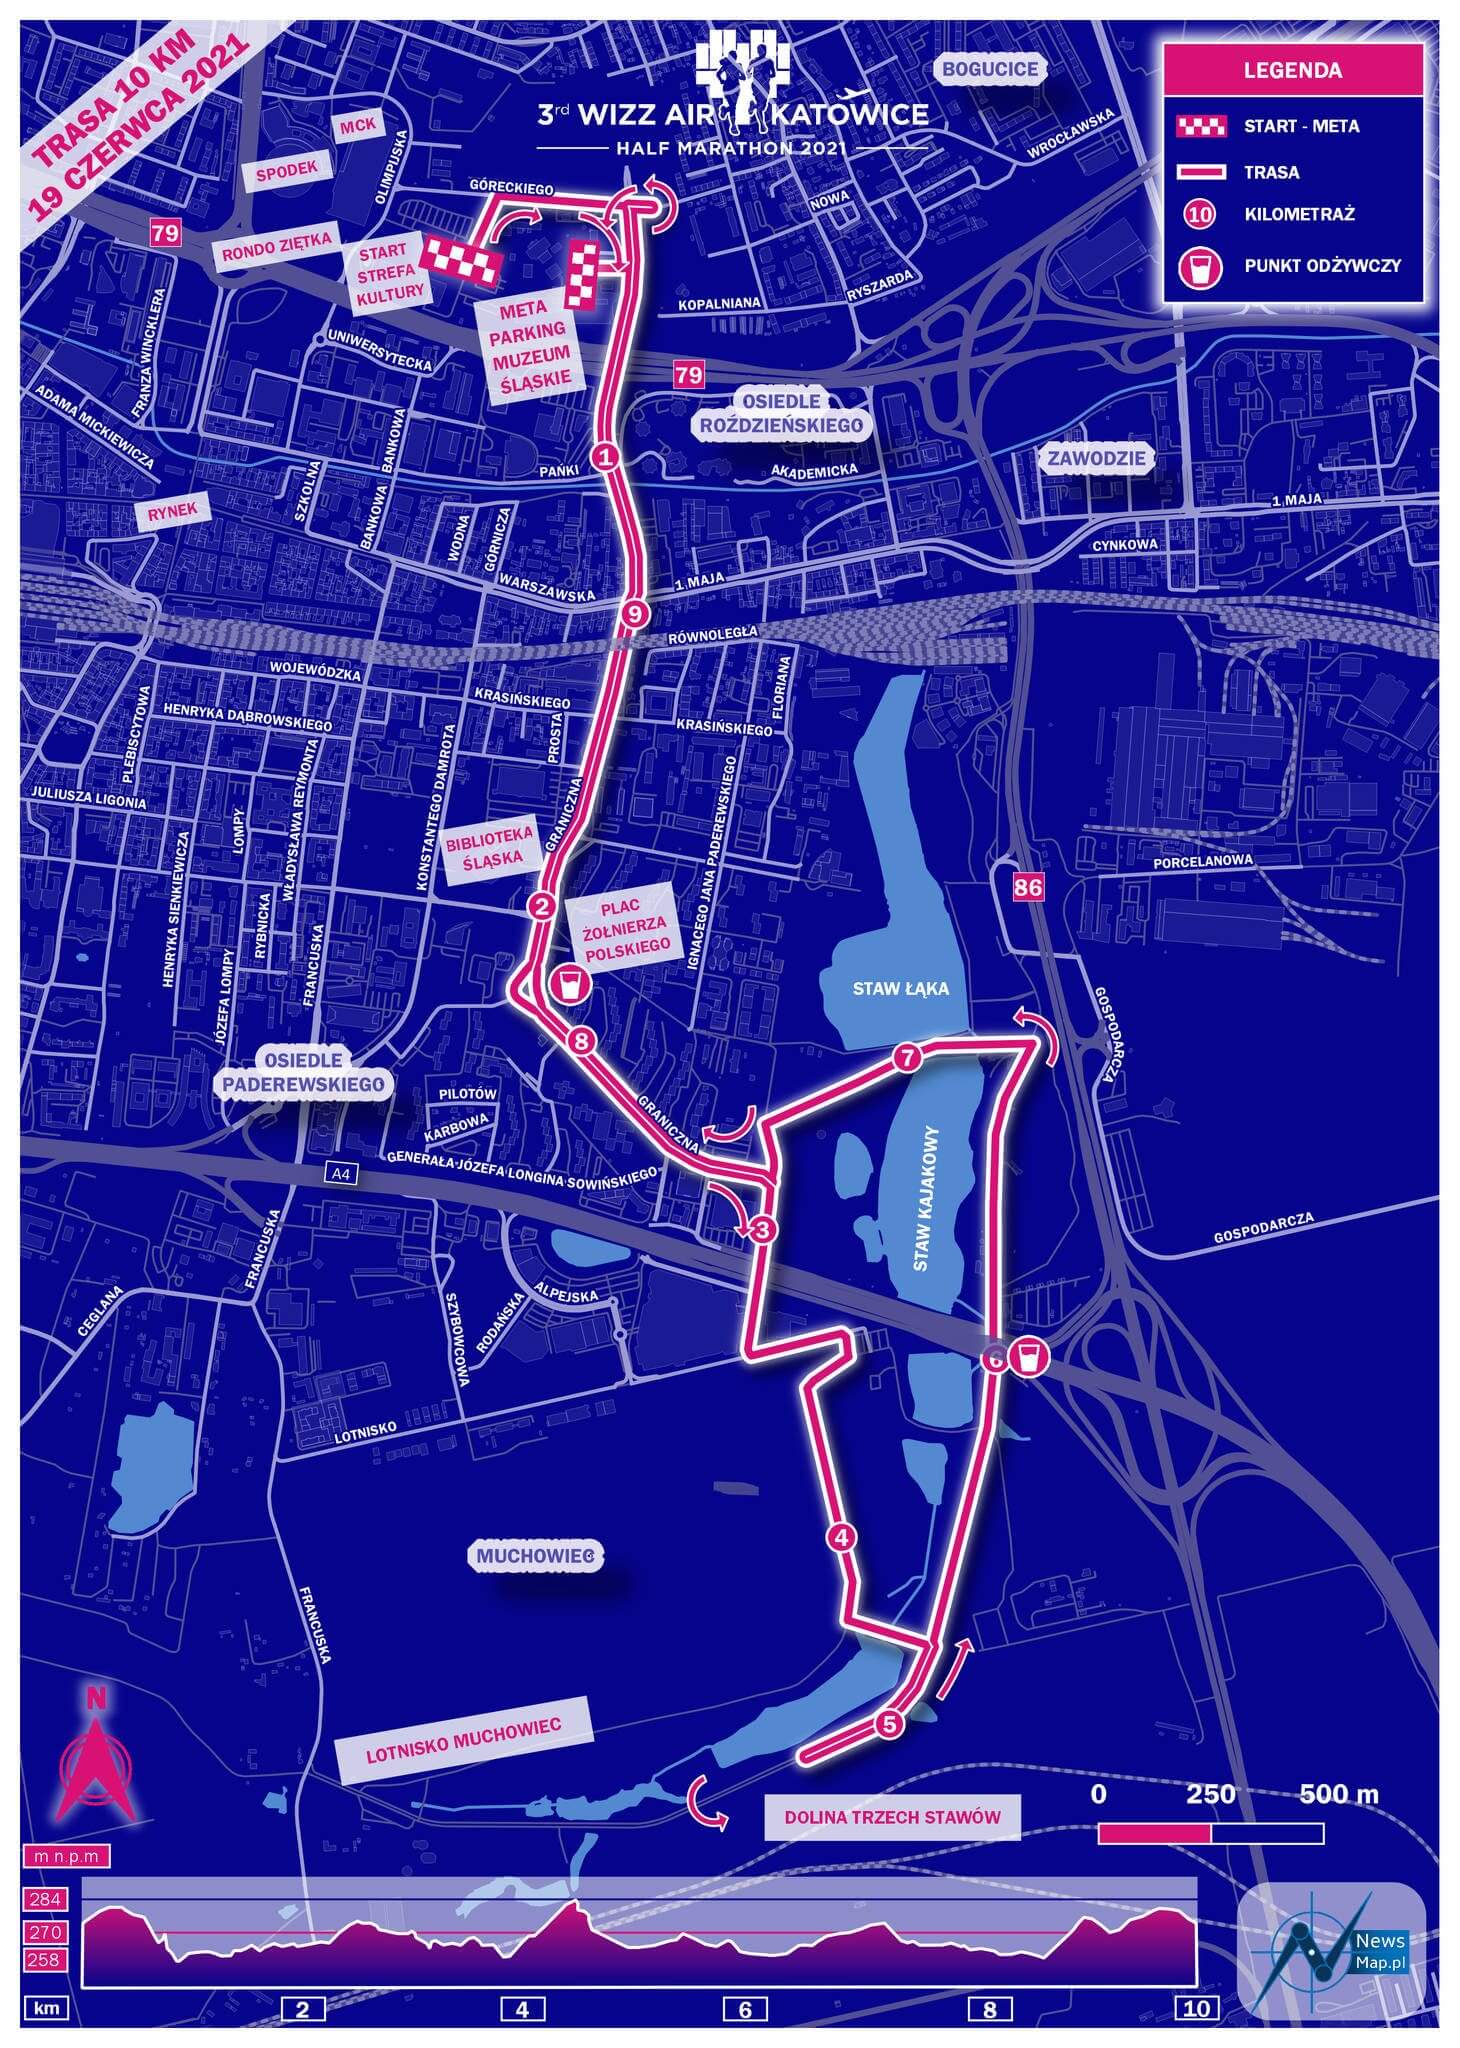 Wizz Air Katowice Half Marathon 2021